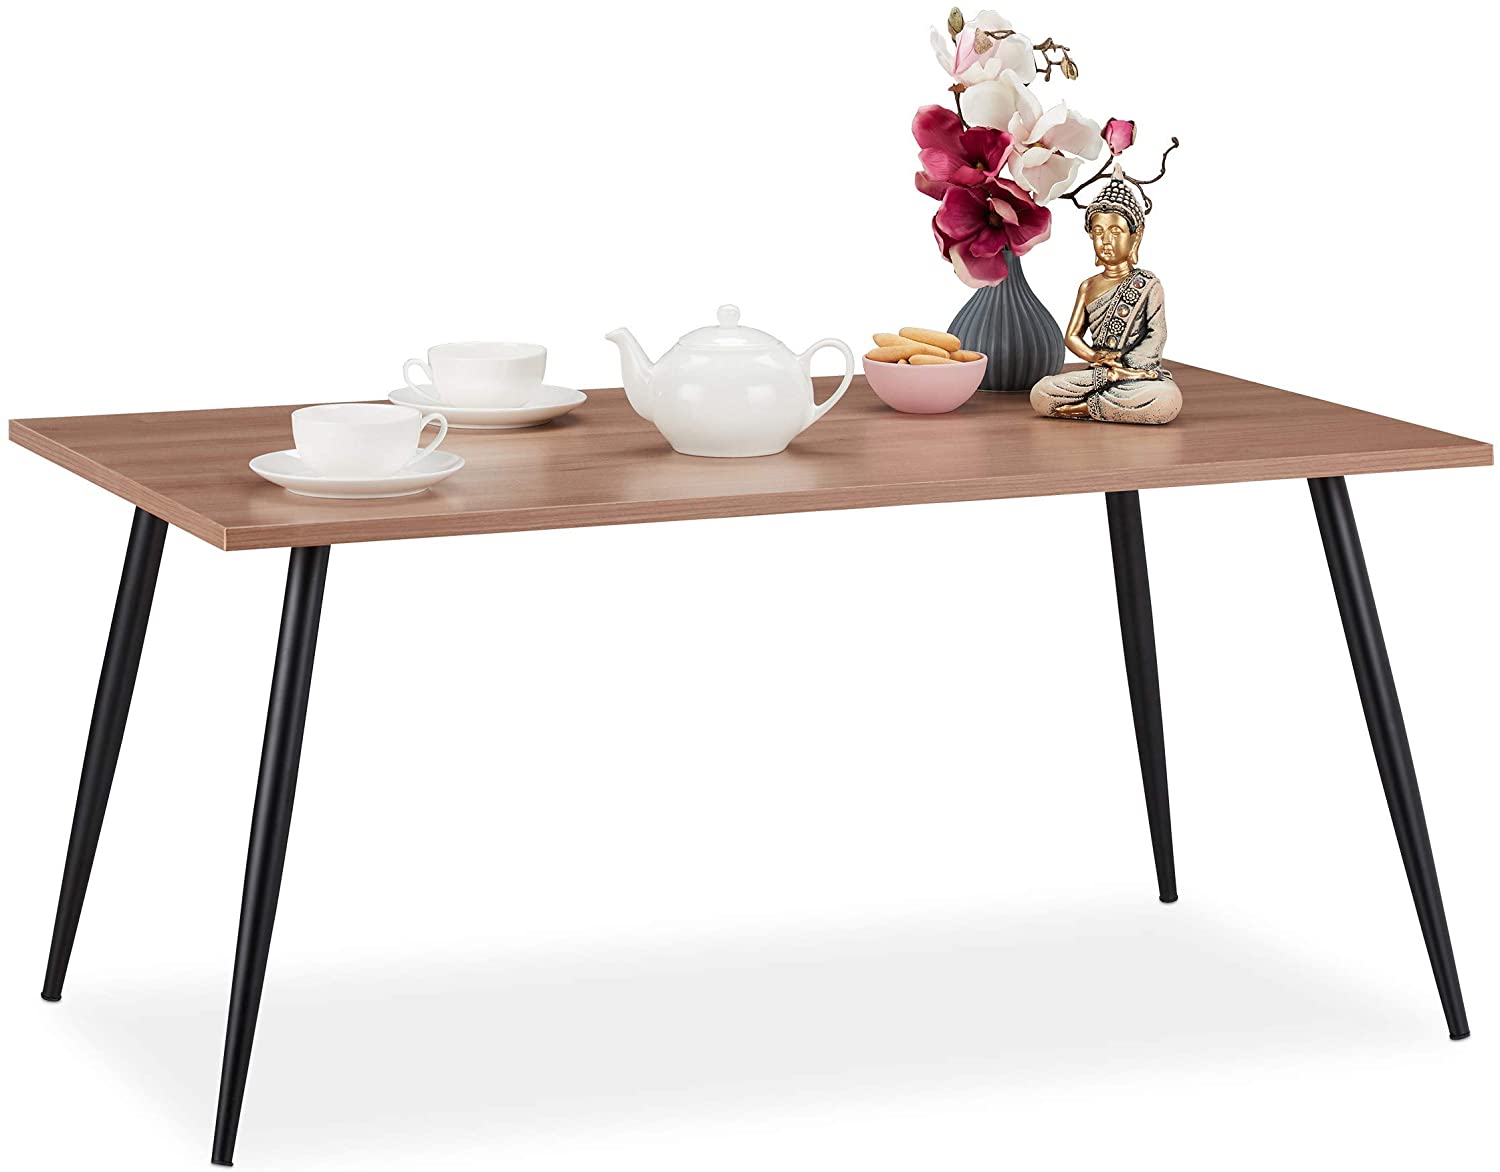 Relaxdays Brown Coffee Table In Wood Effect Metal Legs Rectangular Modern D